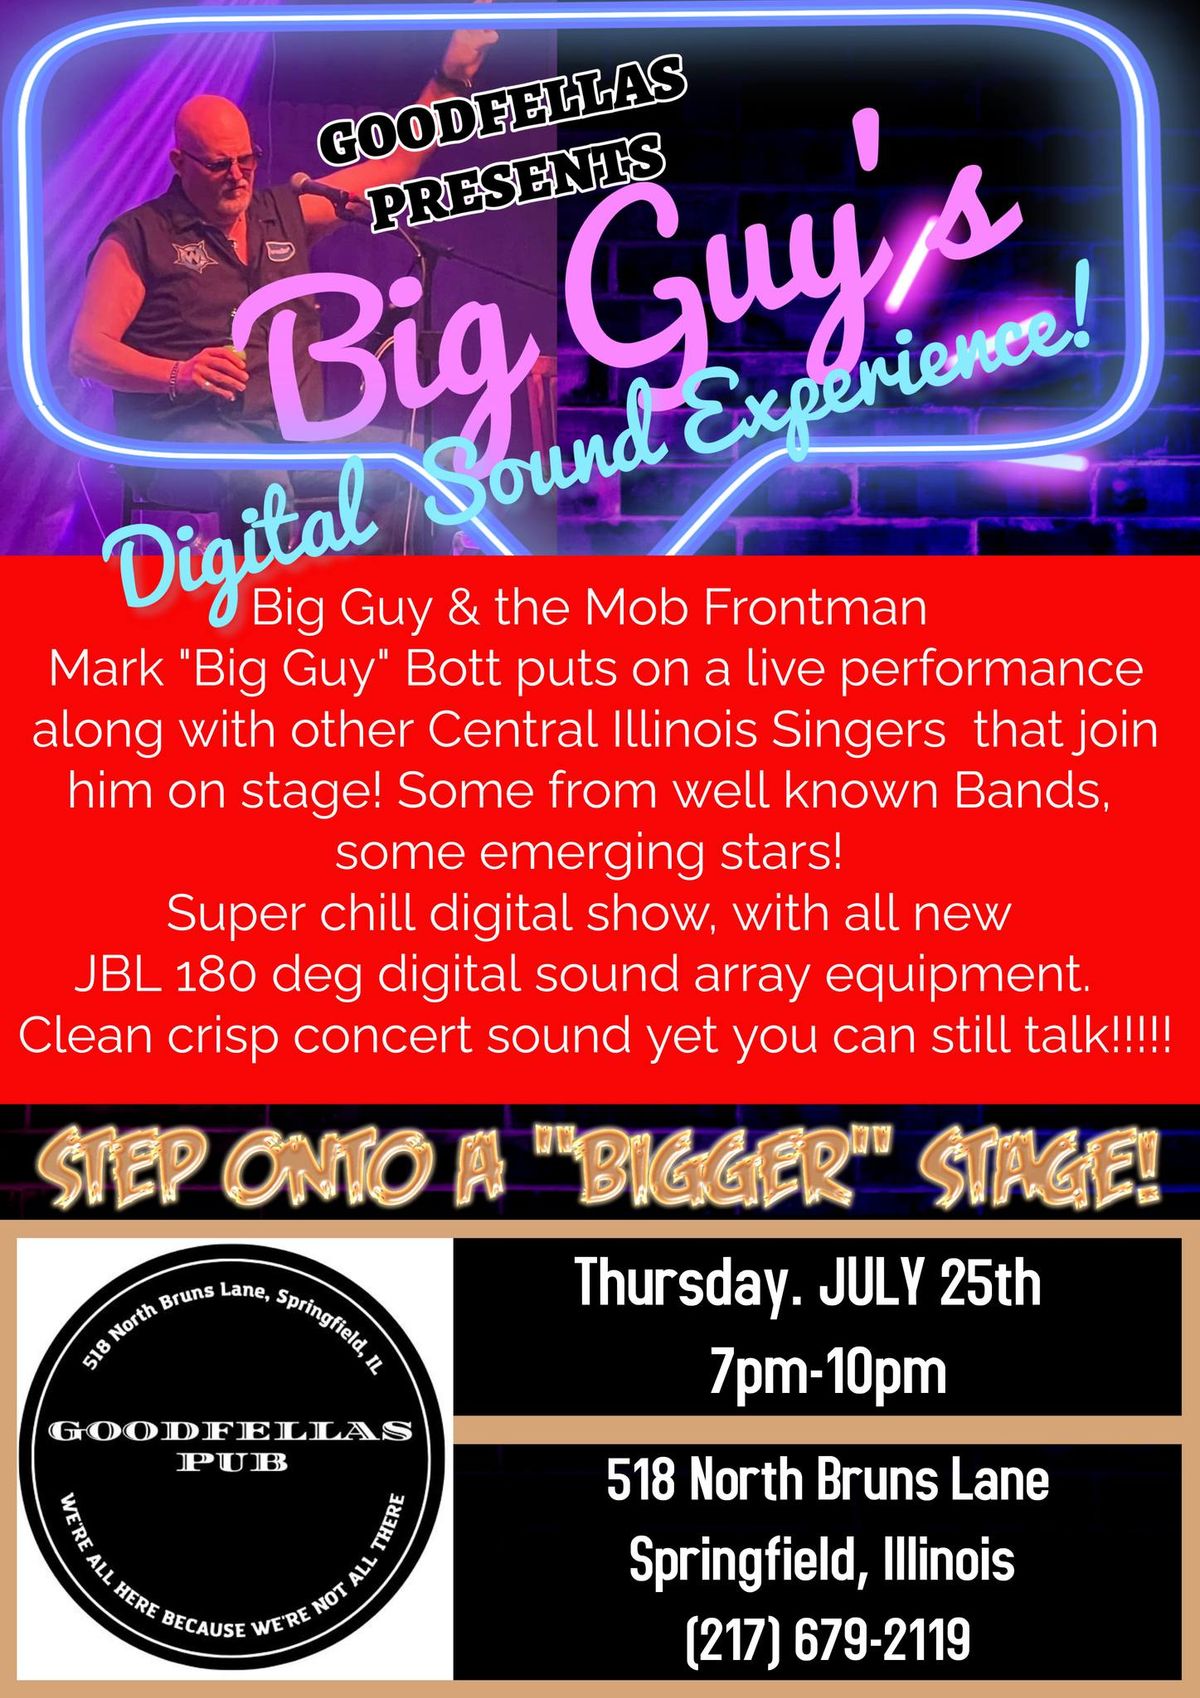 Goodfellas presents: Big Guy's Digital Sound Experience